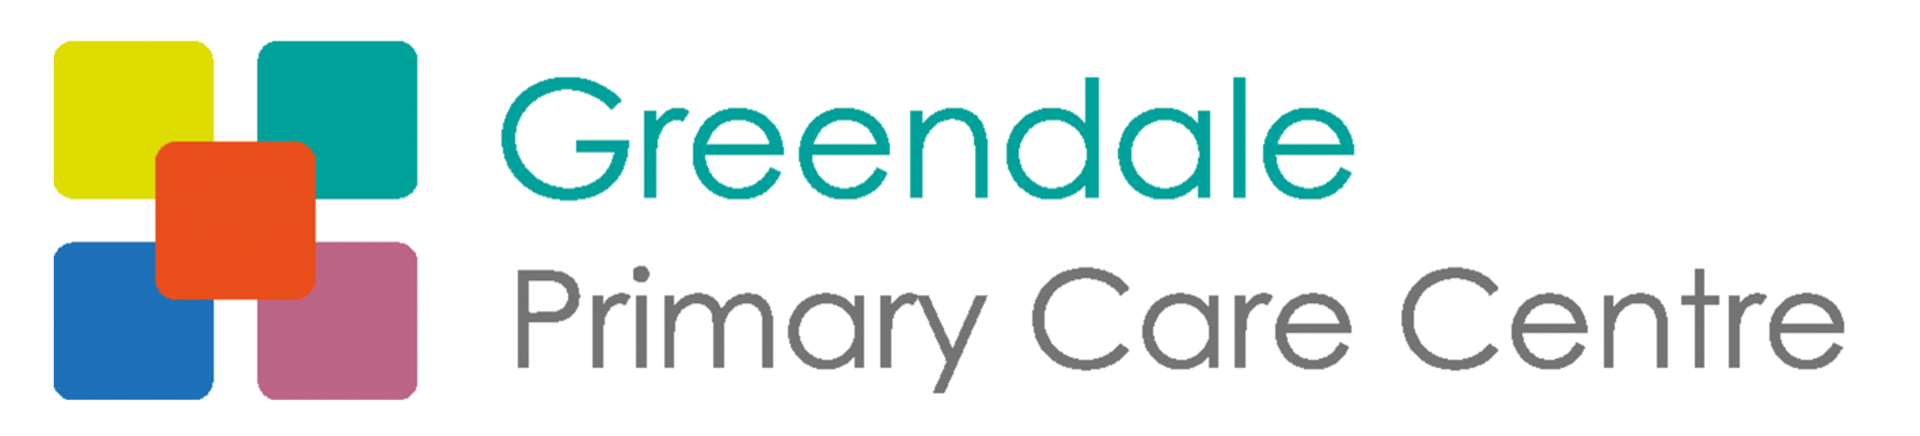 Greendale Primary Care Centre Logo